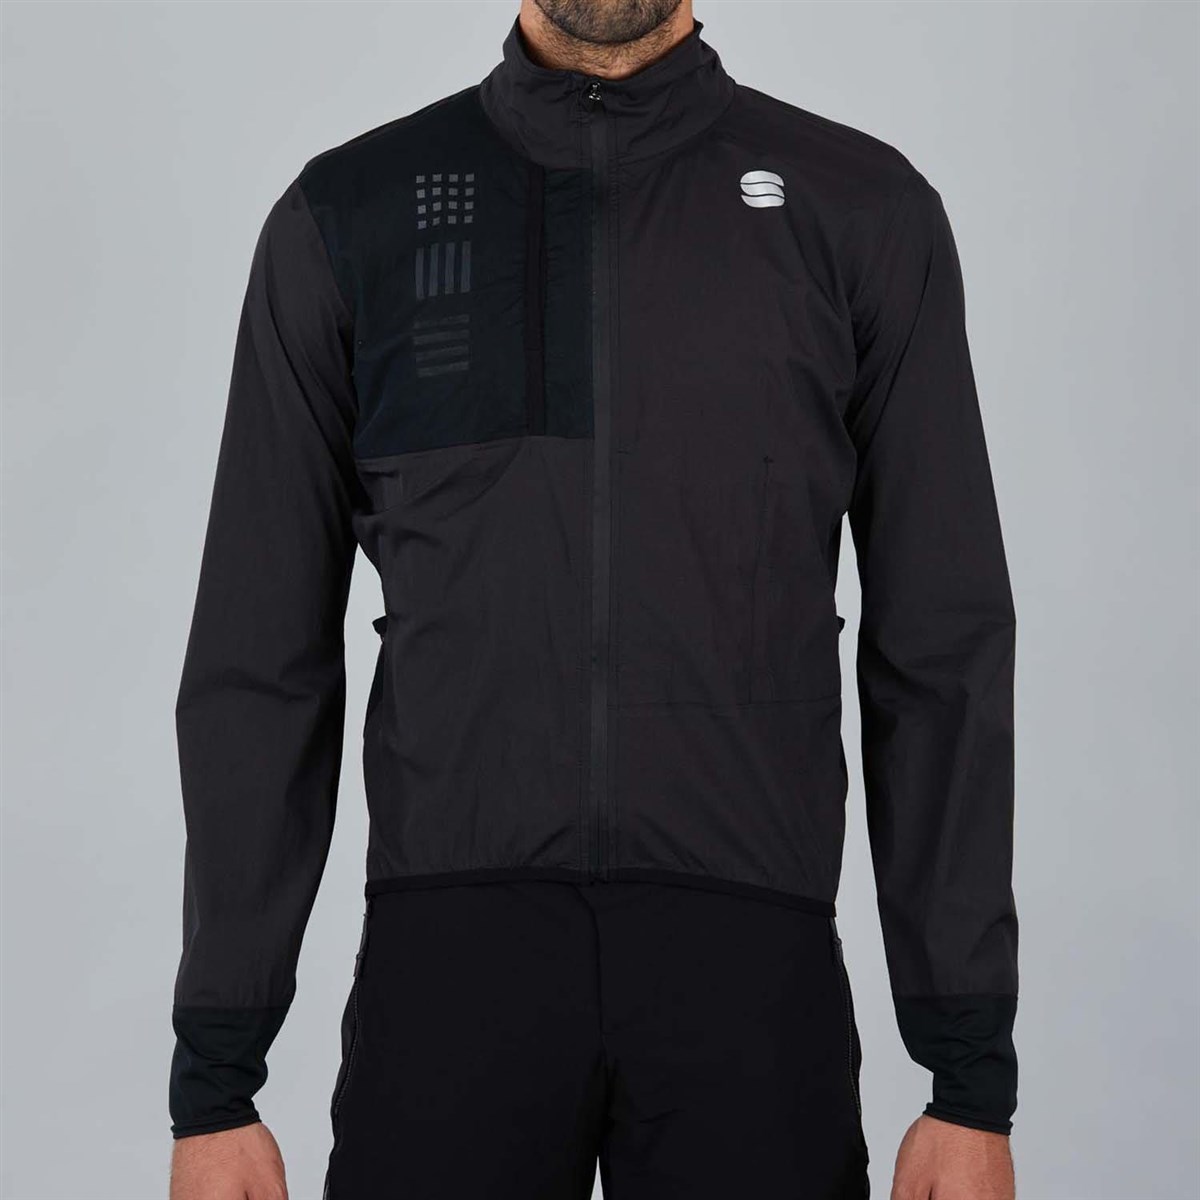 Sportful DR Long Sleeve Cycling Jacket product image